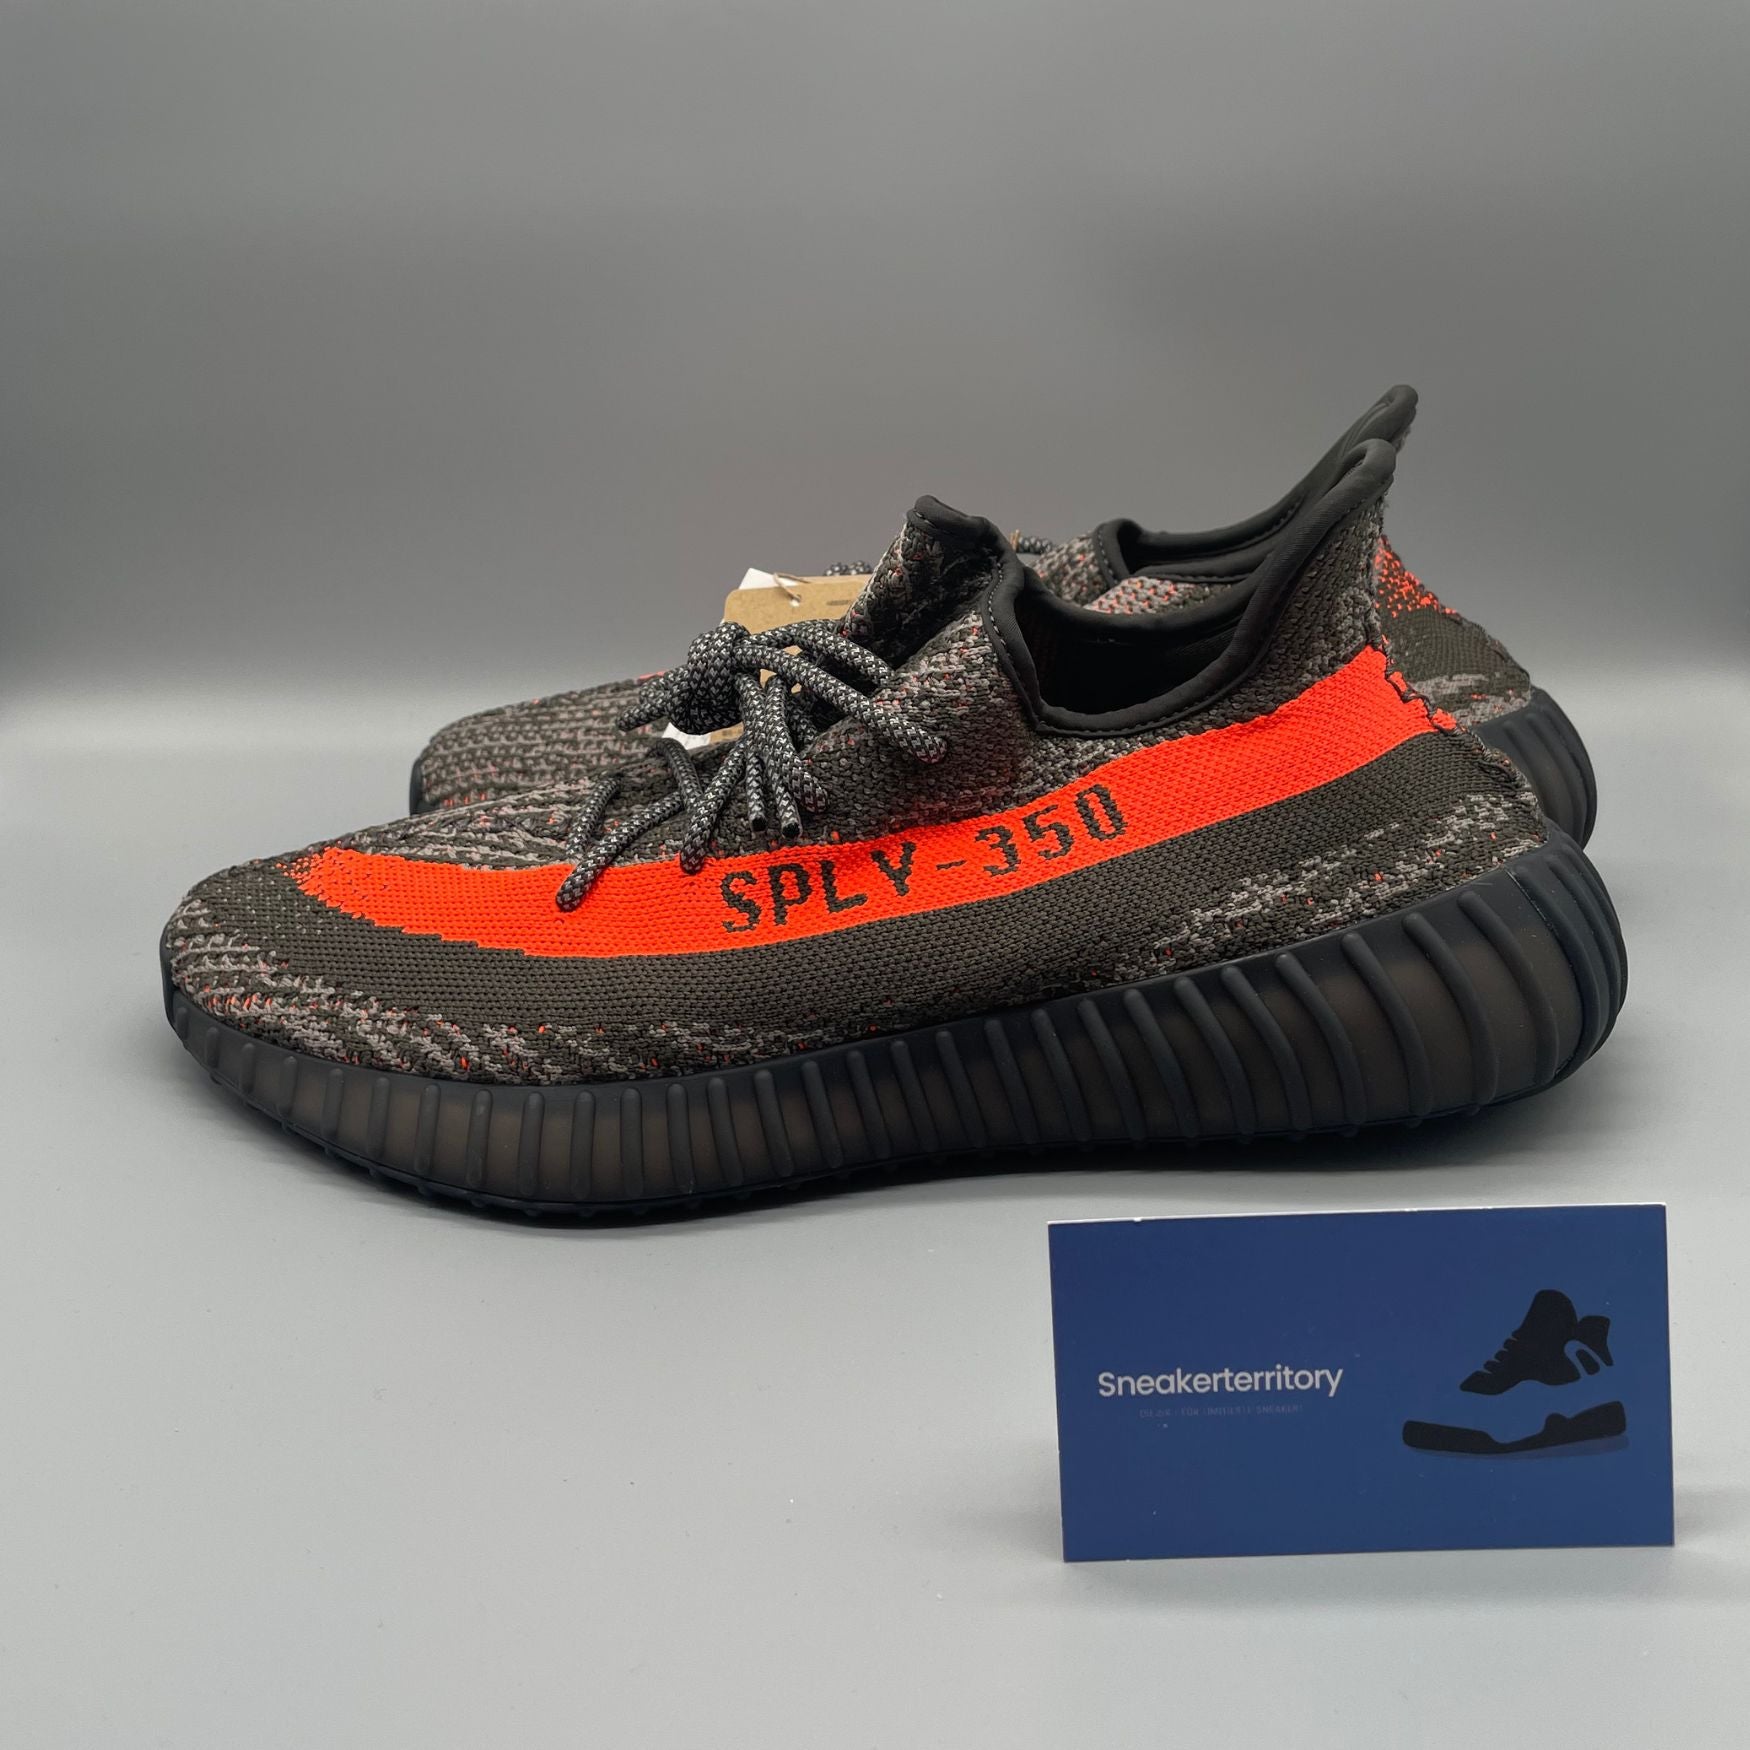 Adidas Yeezy Boost 350 V2 Carbon Beluga -Sneakerterritory; Sneaker Territory 2